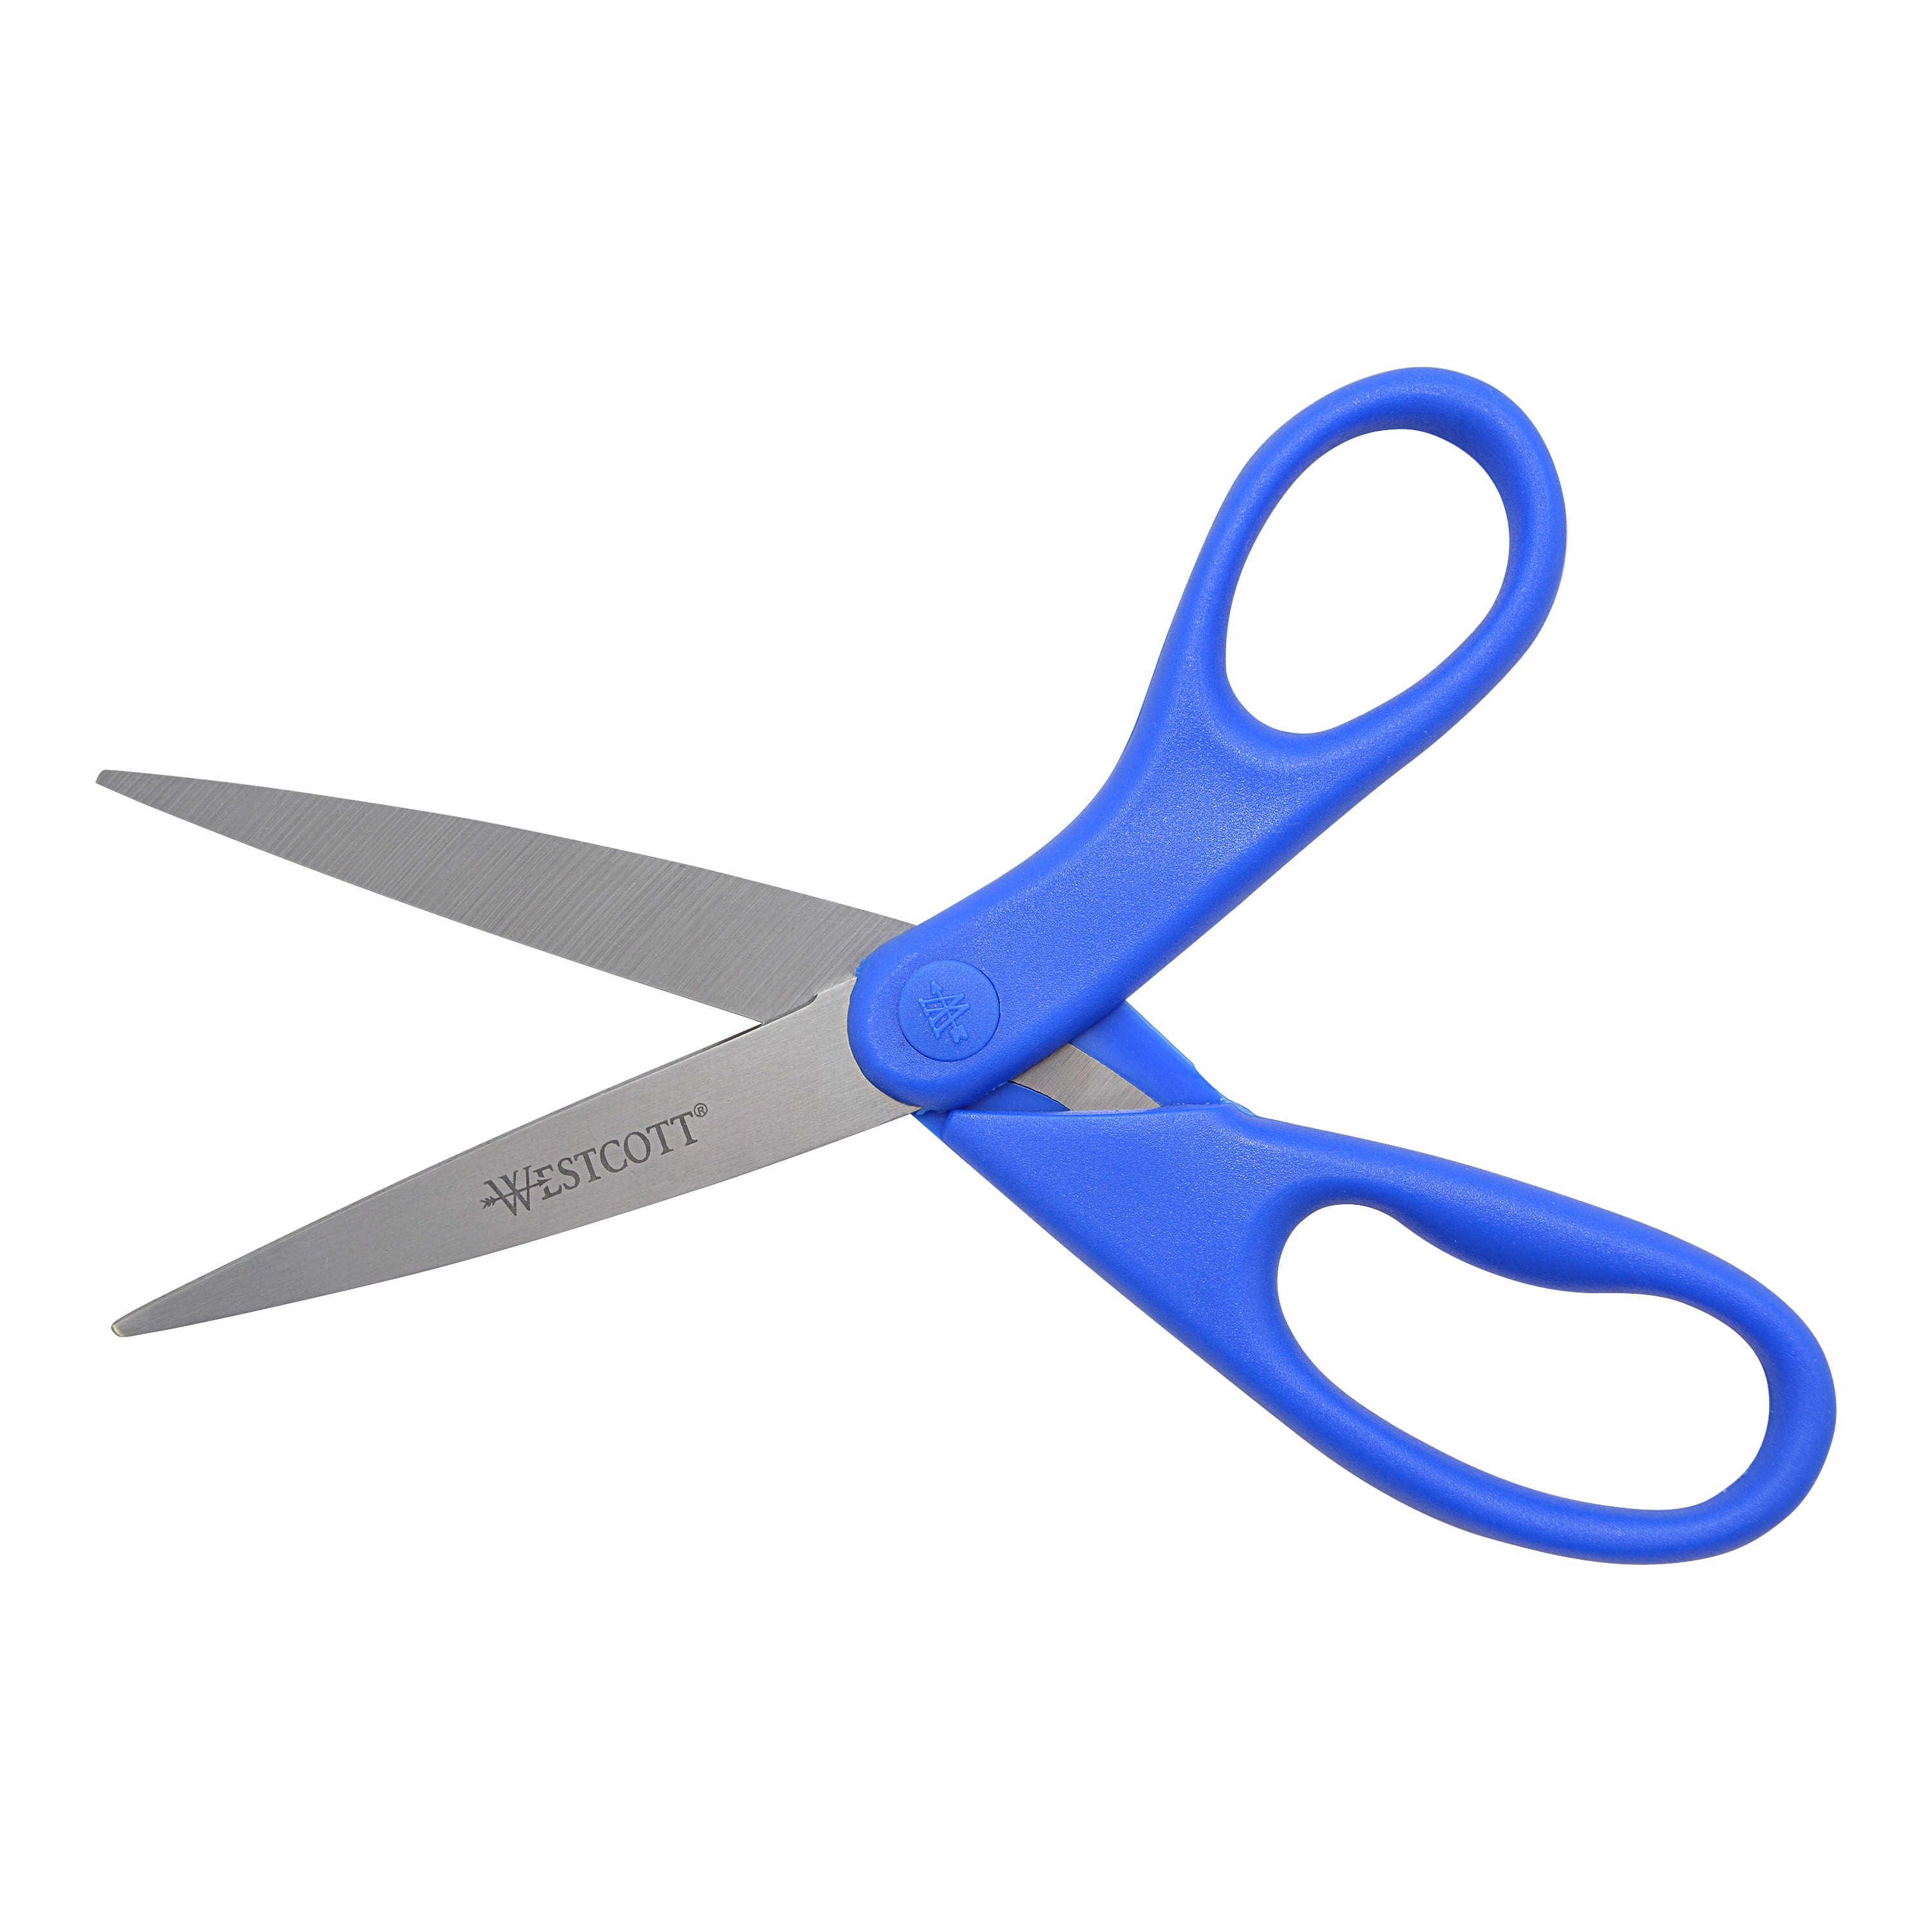 Westcott All Purpose Preferred Stainless Steel Scissors, 5, Blue (44216)